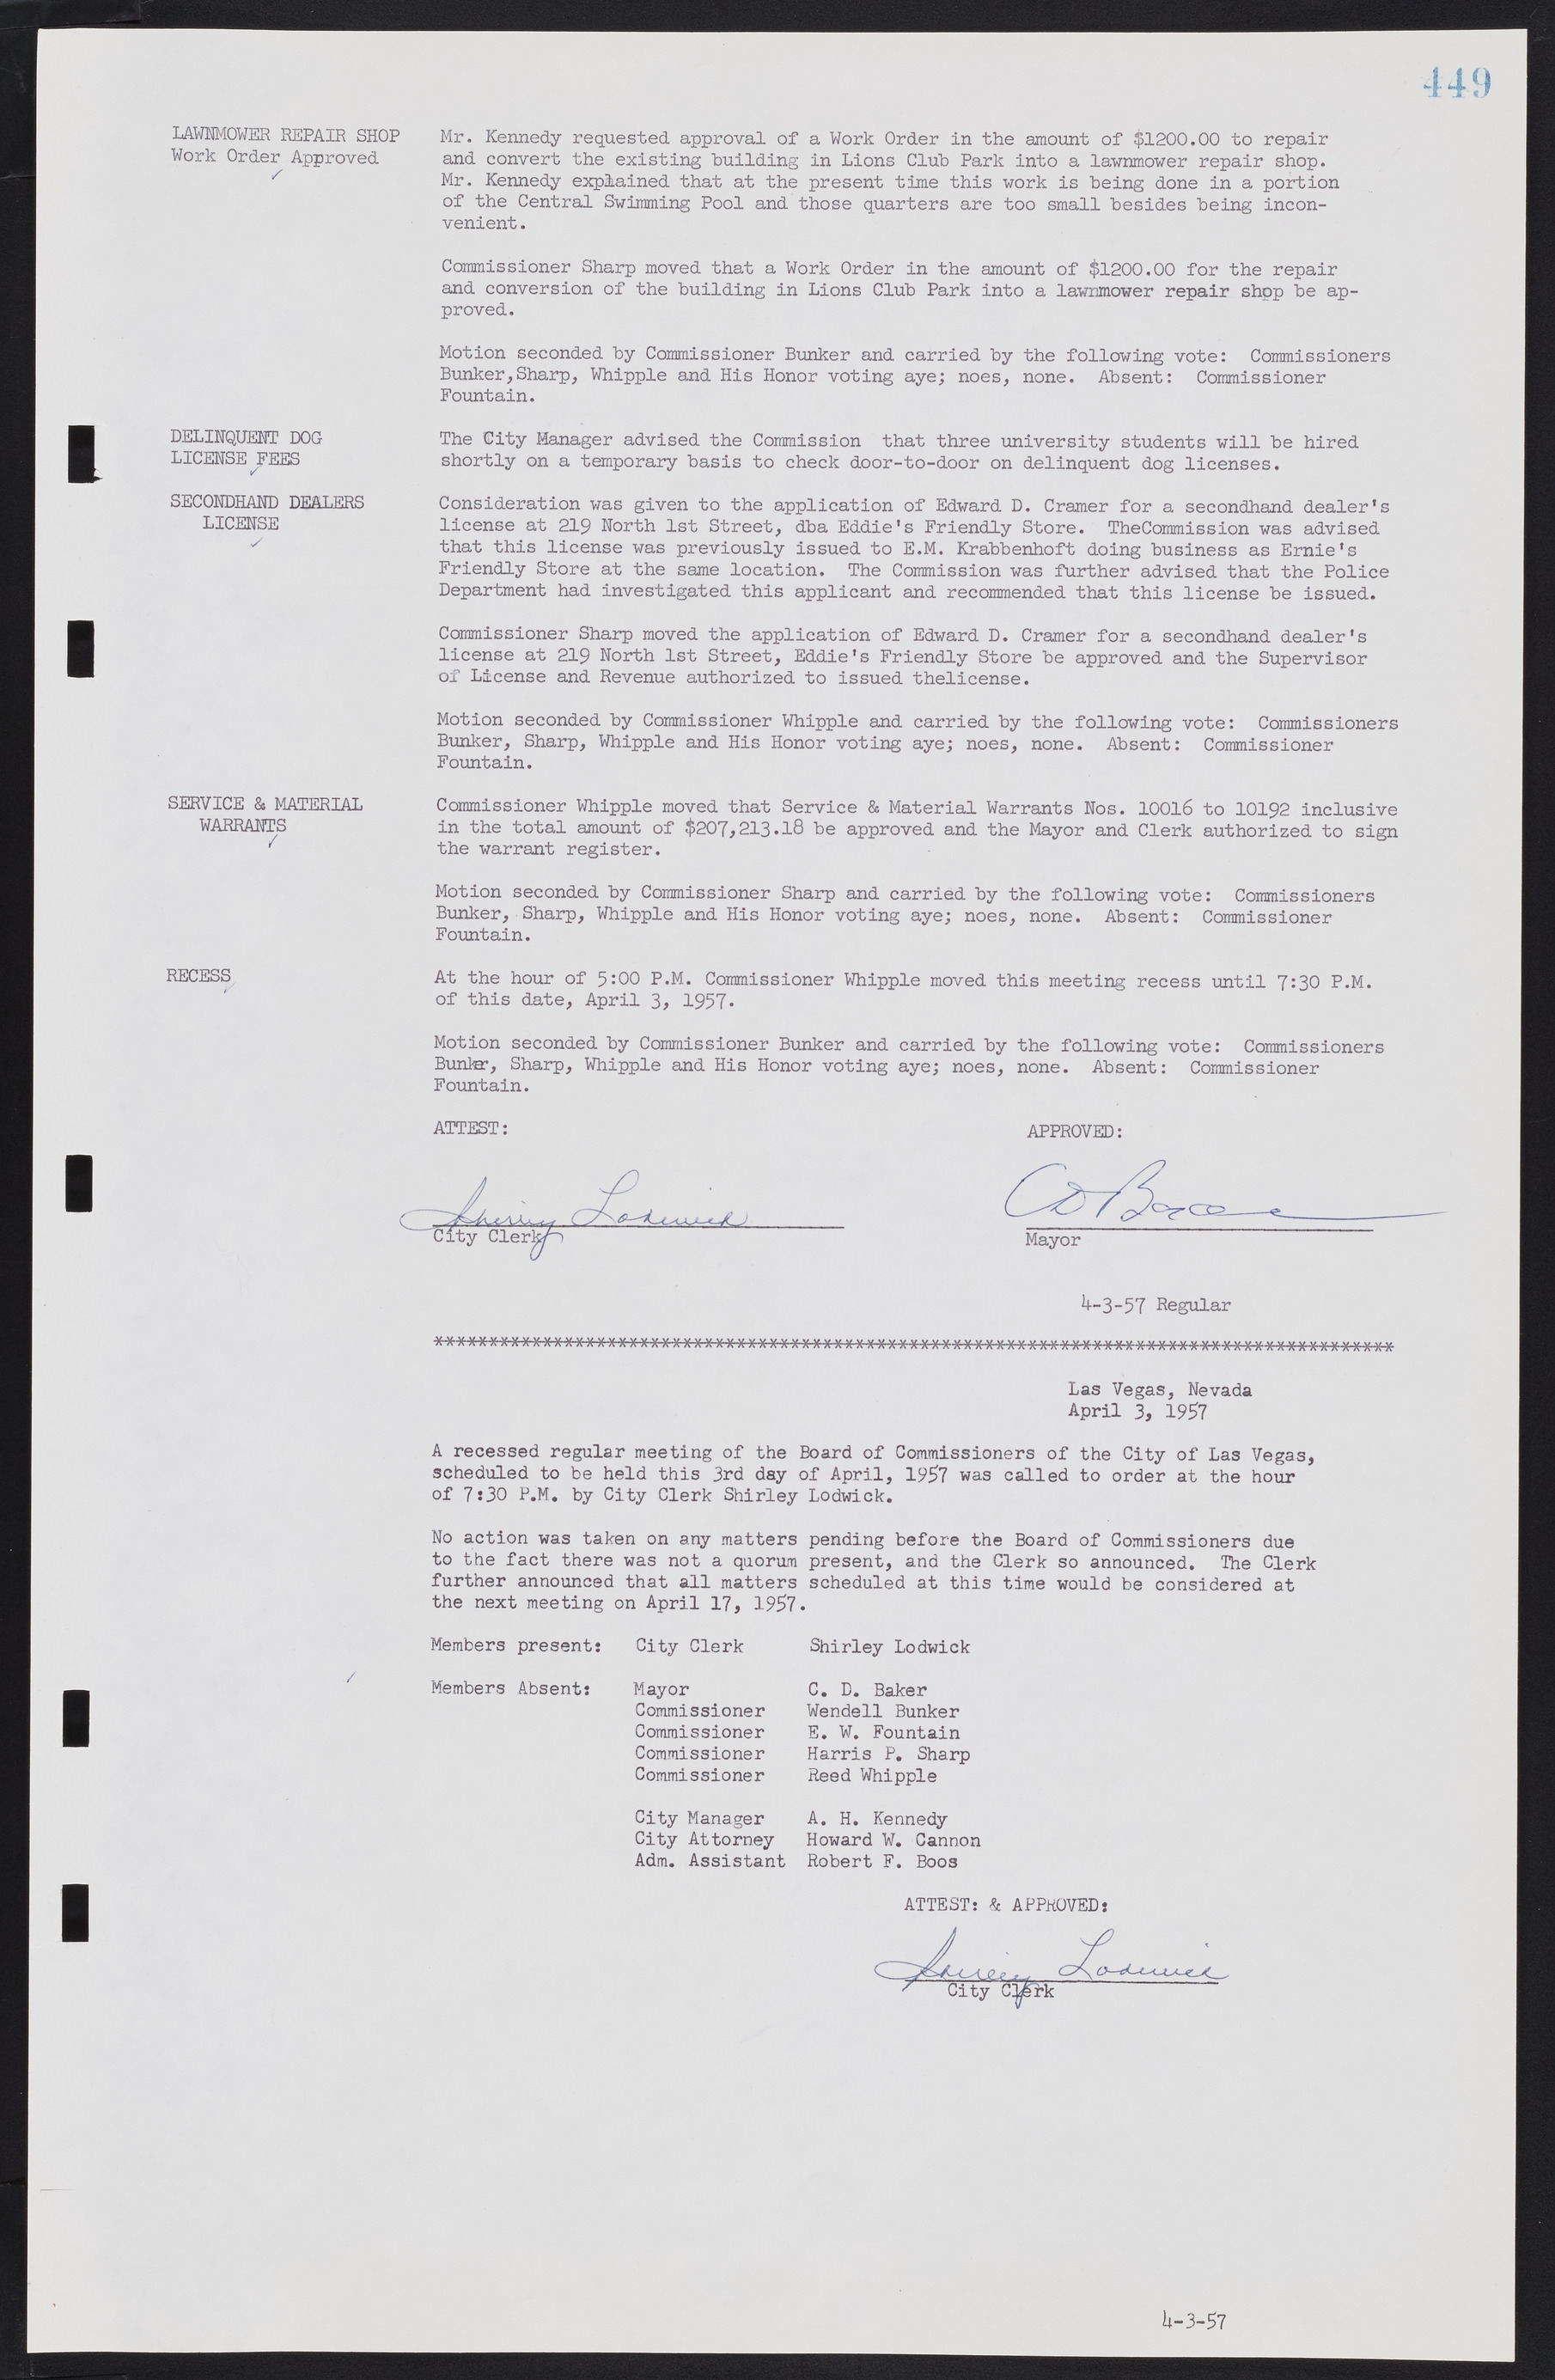 Las Vegas City Commission Minutes, September 21, 1955 to November 20, 1957, lvc000010-469